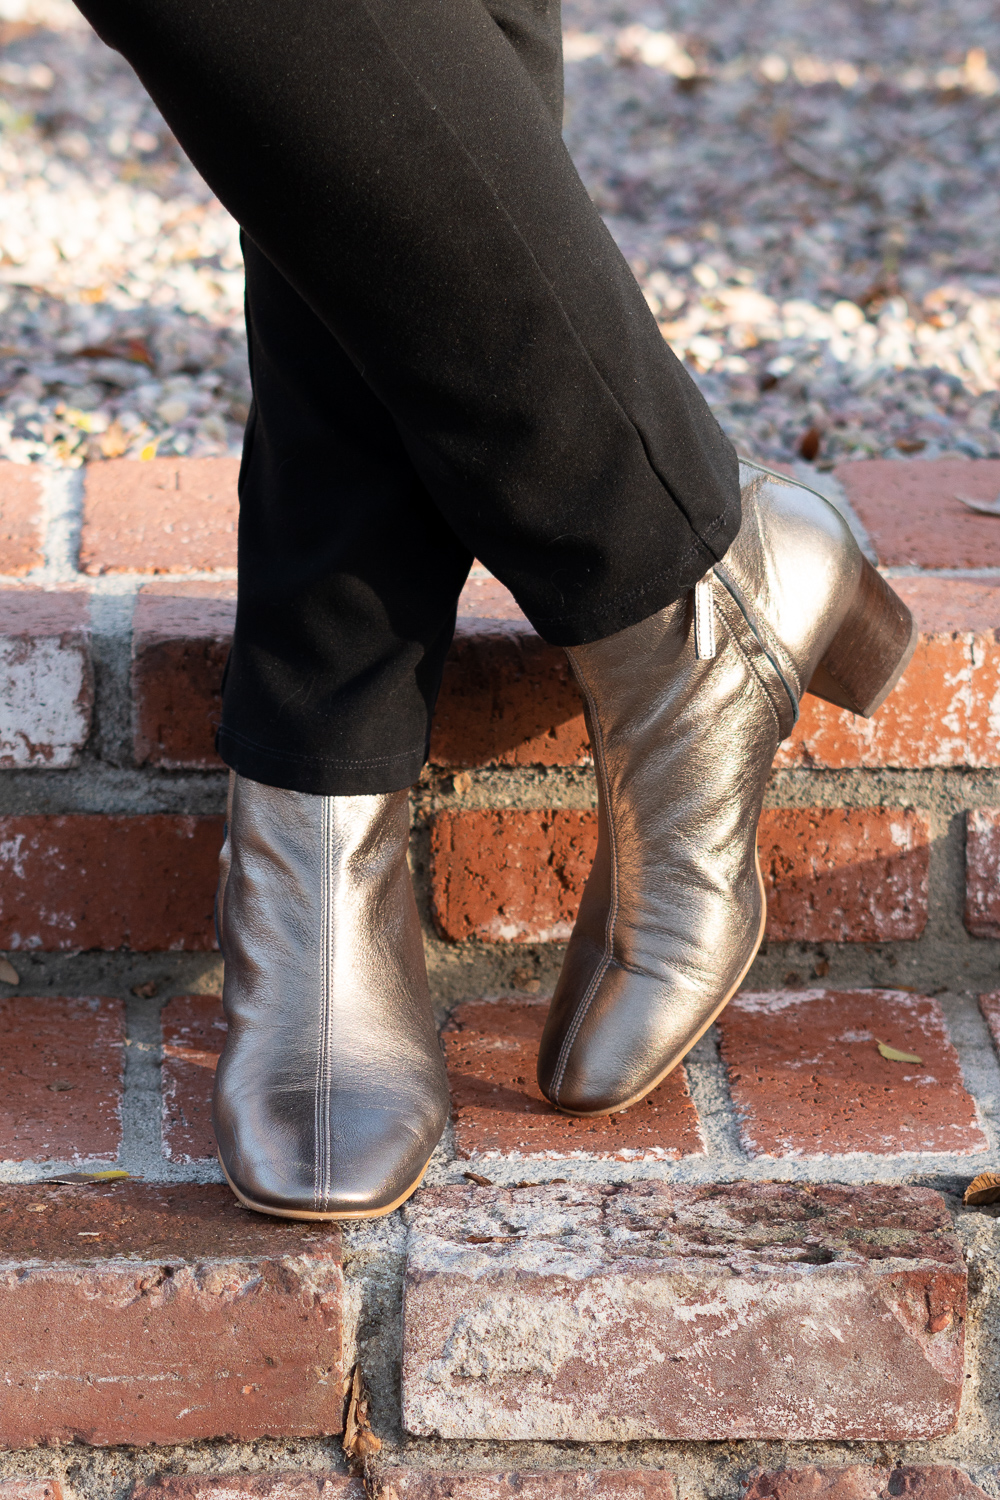 Details: Everlane Day Boots, metallic ankle boots. More at une femme d'un certain age.